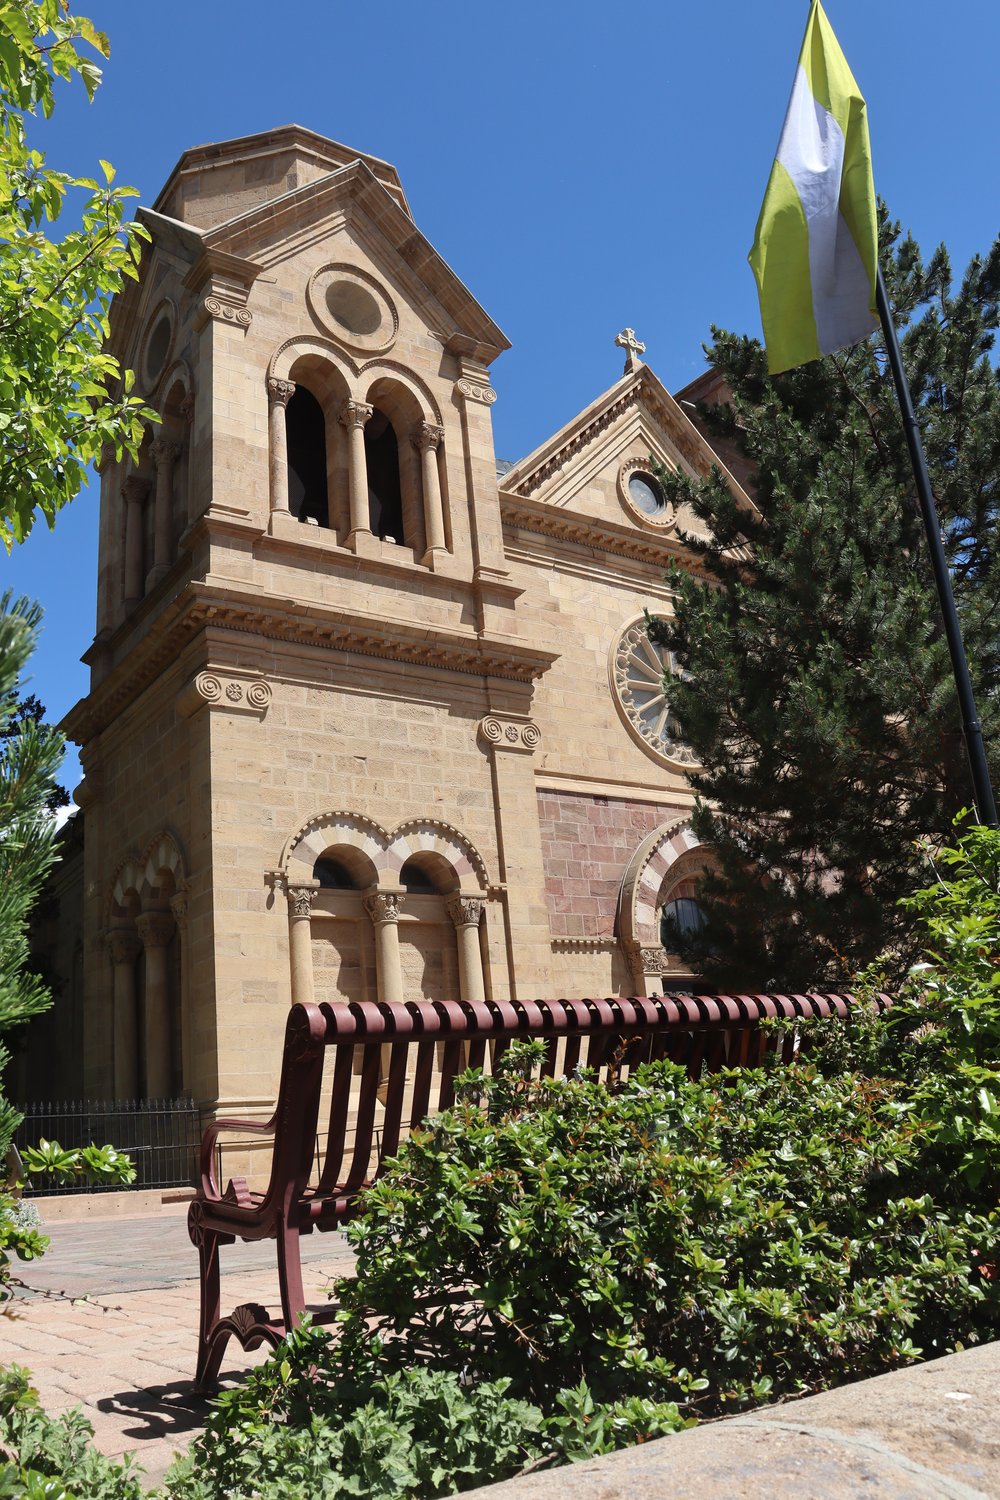 Church in Santa Fe. It has a black Madonna. We heard the bells several times.